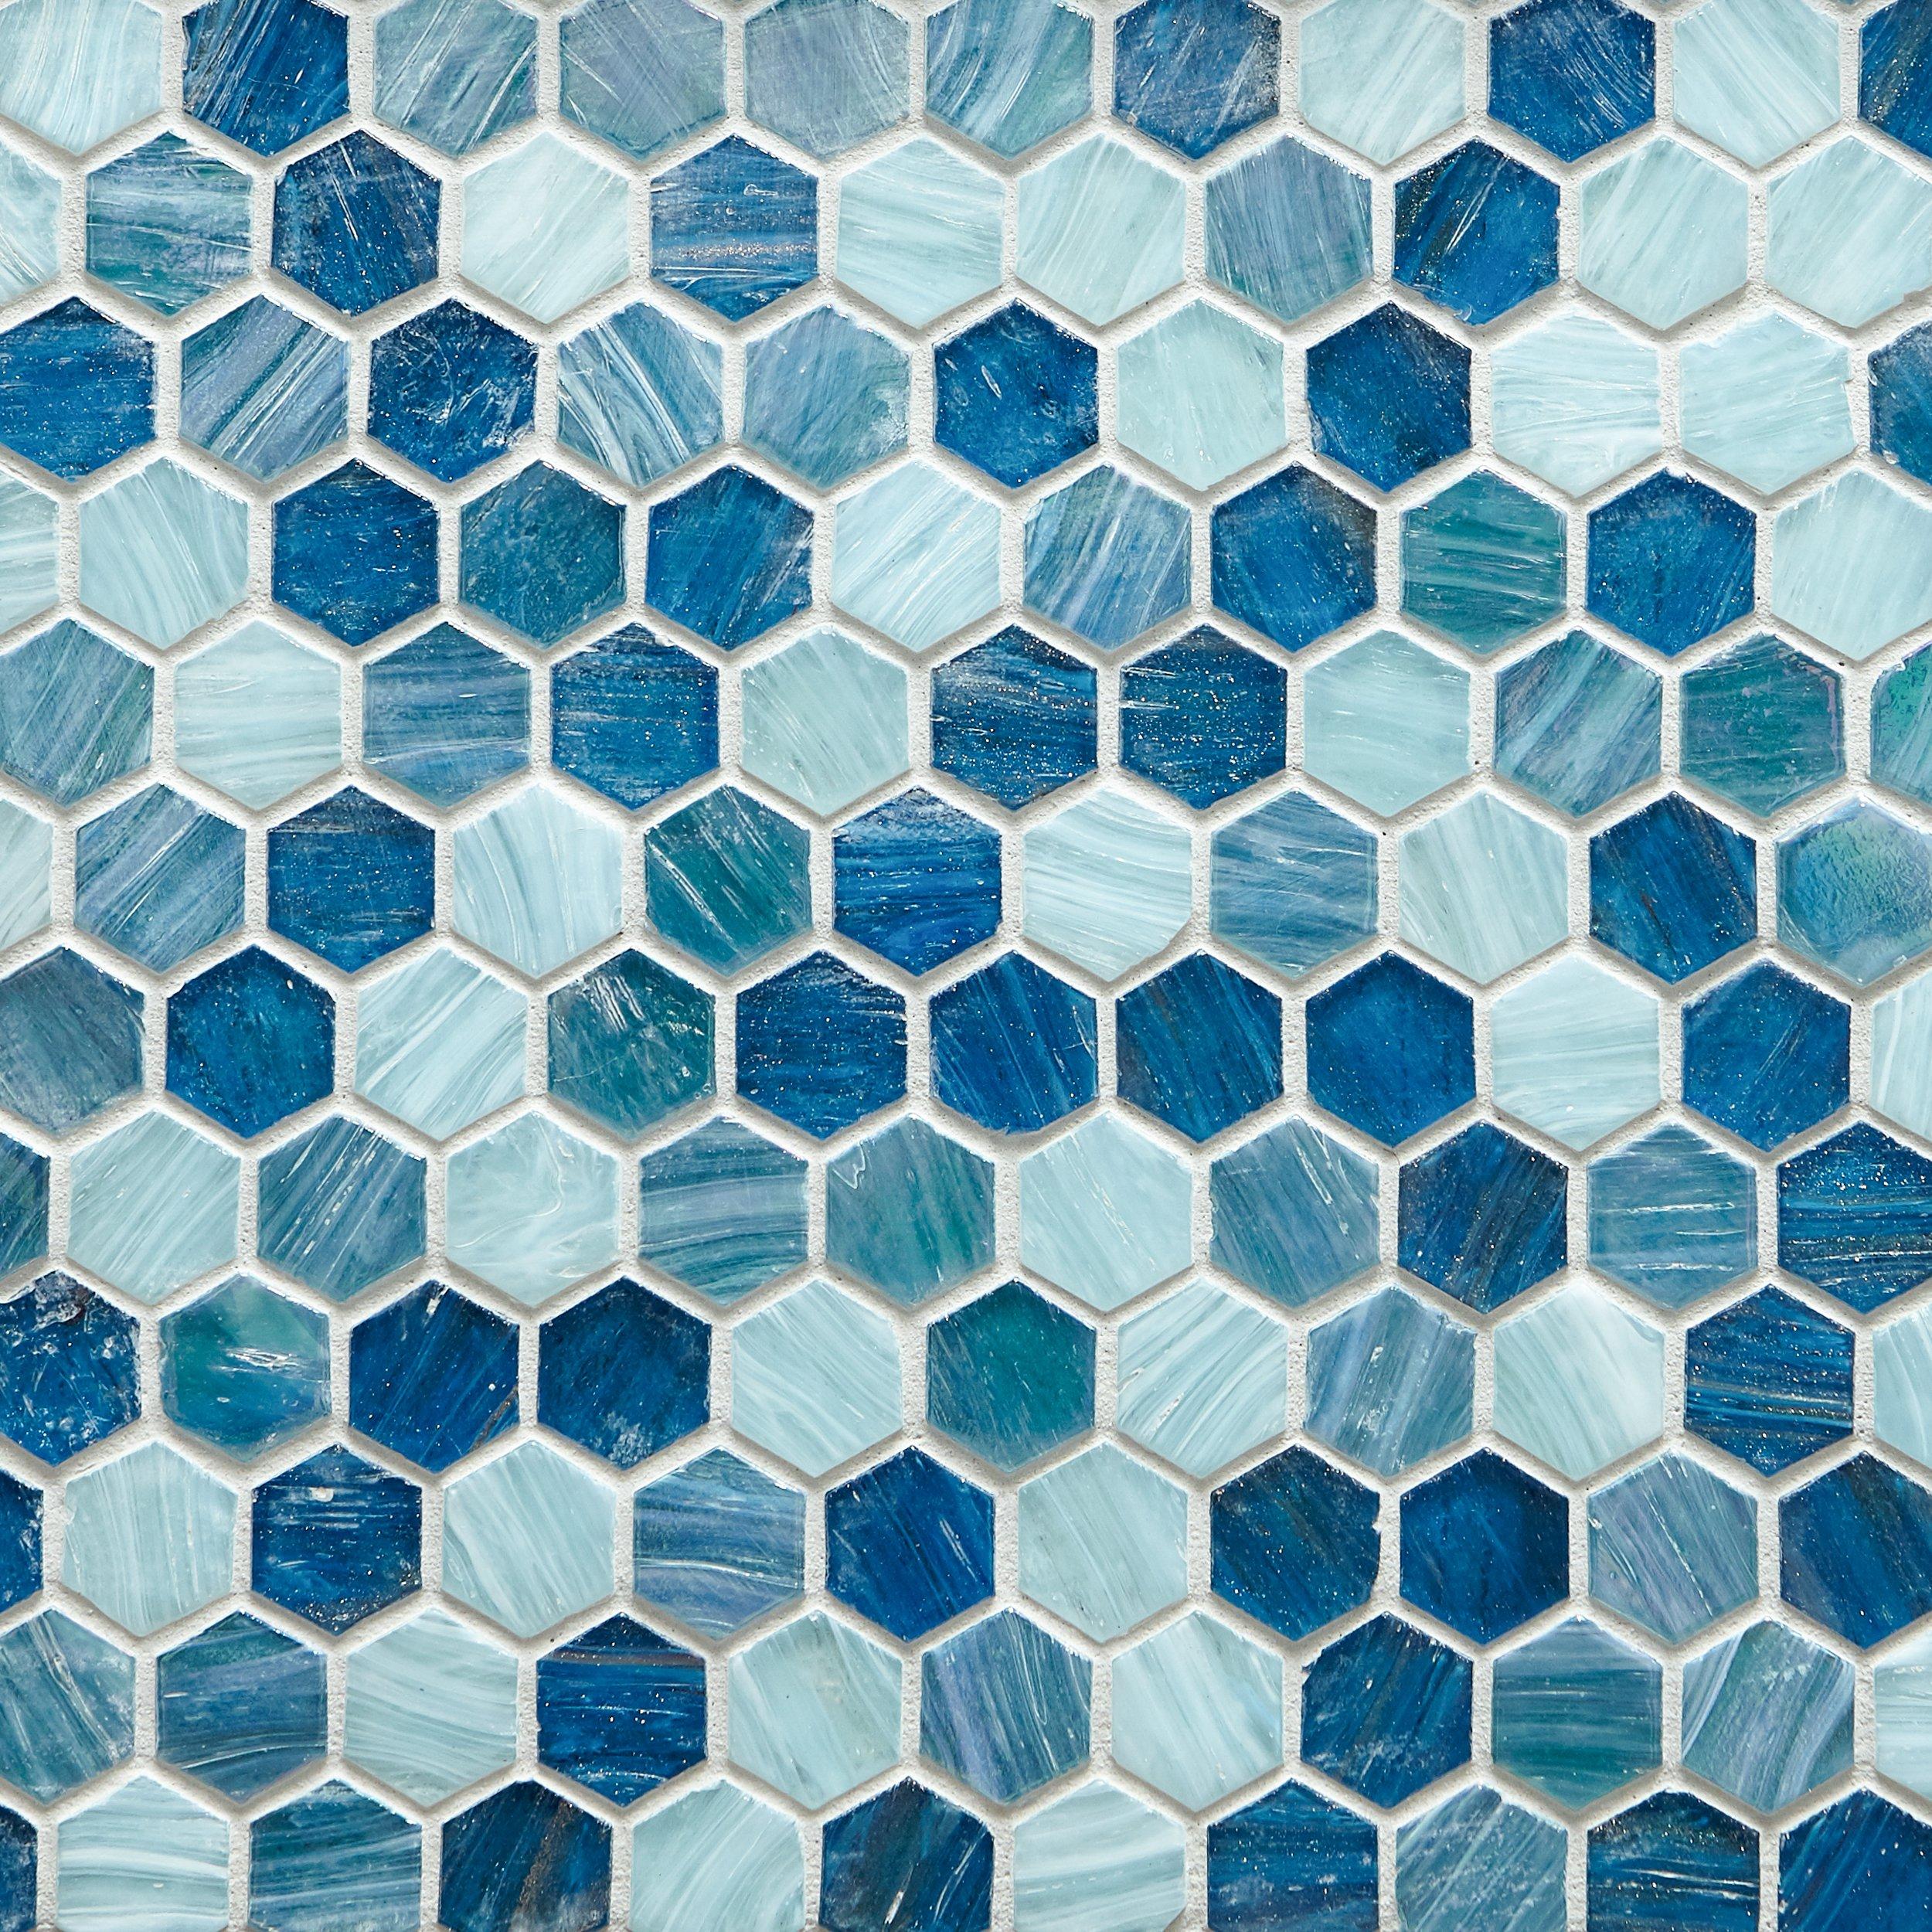 Capri 1 in. Hexagon Hot Glass Mosaic